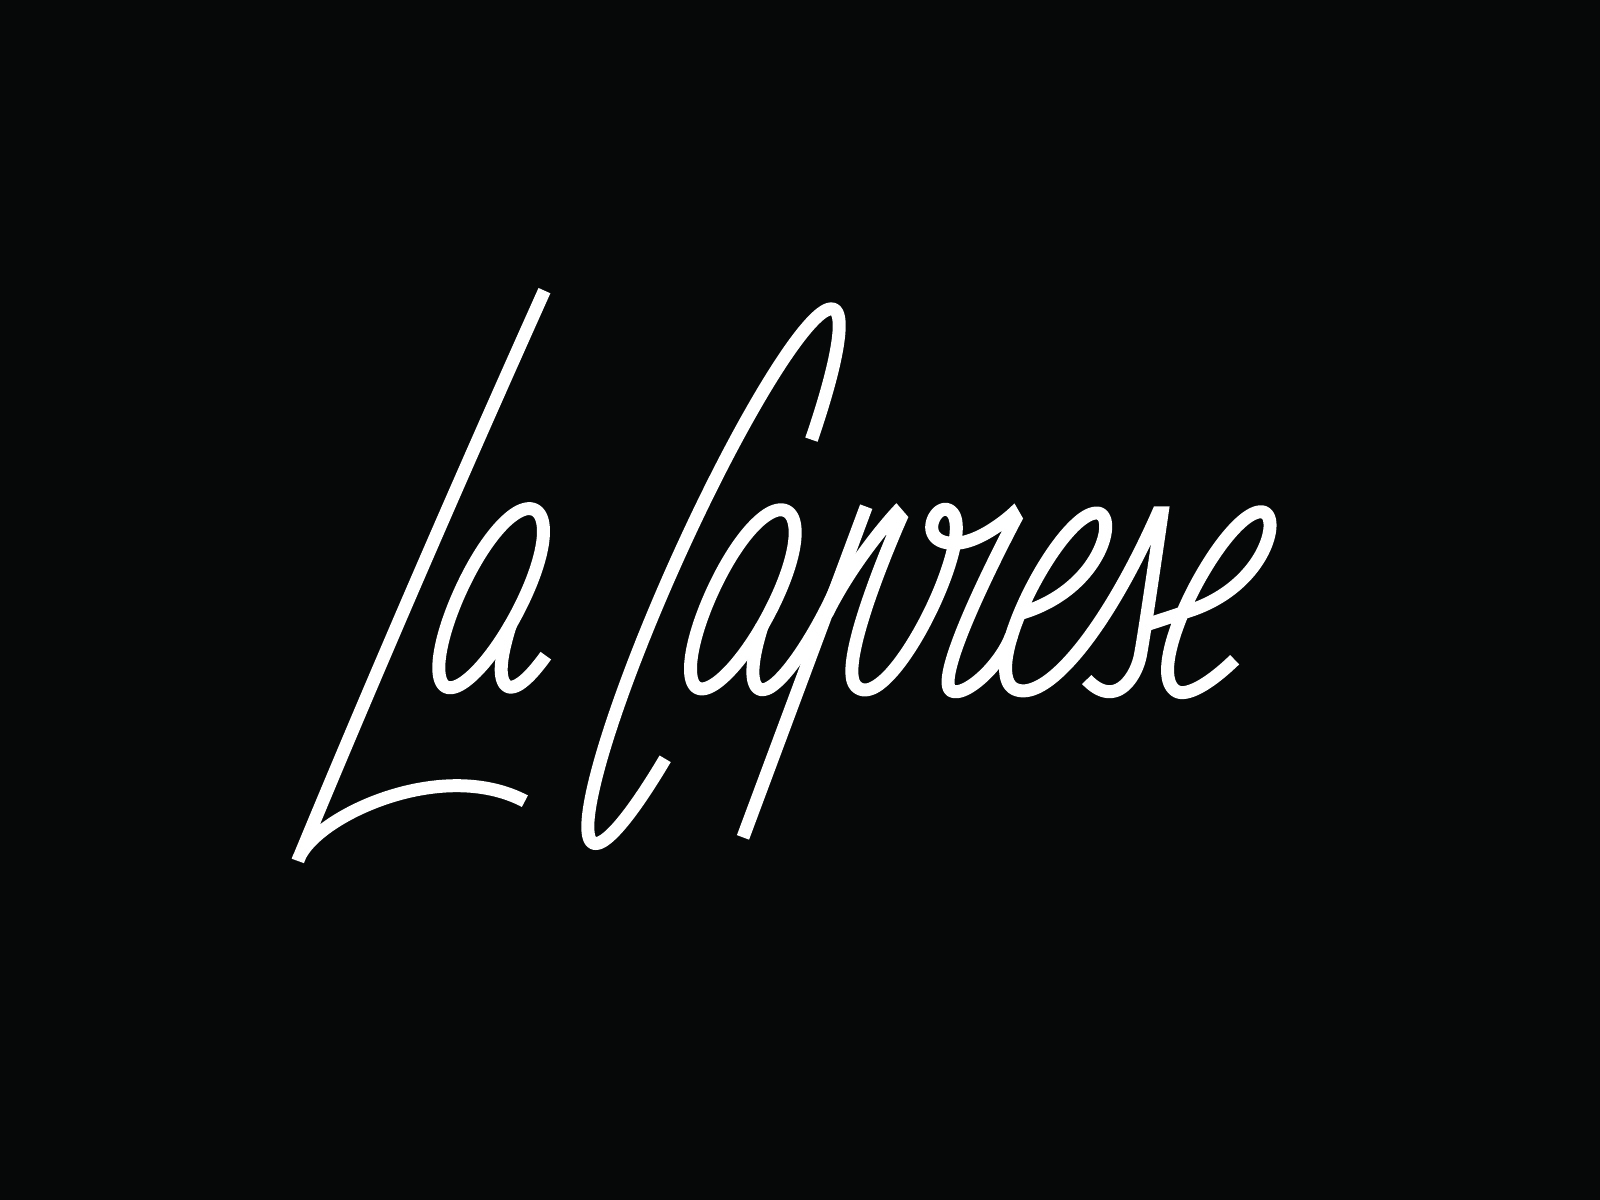 La Caprese - Brand Identity by Liviu Avasiloiei on Dribbble